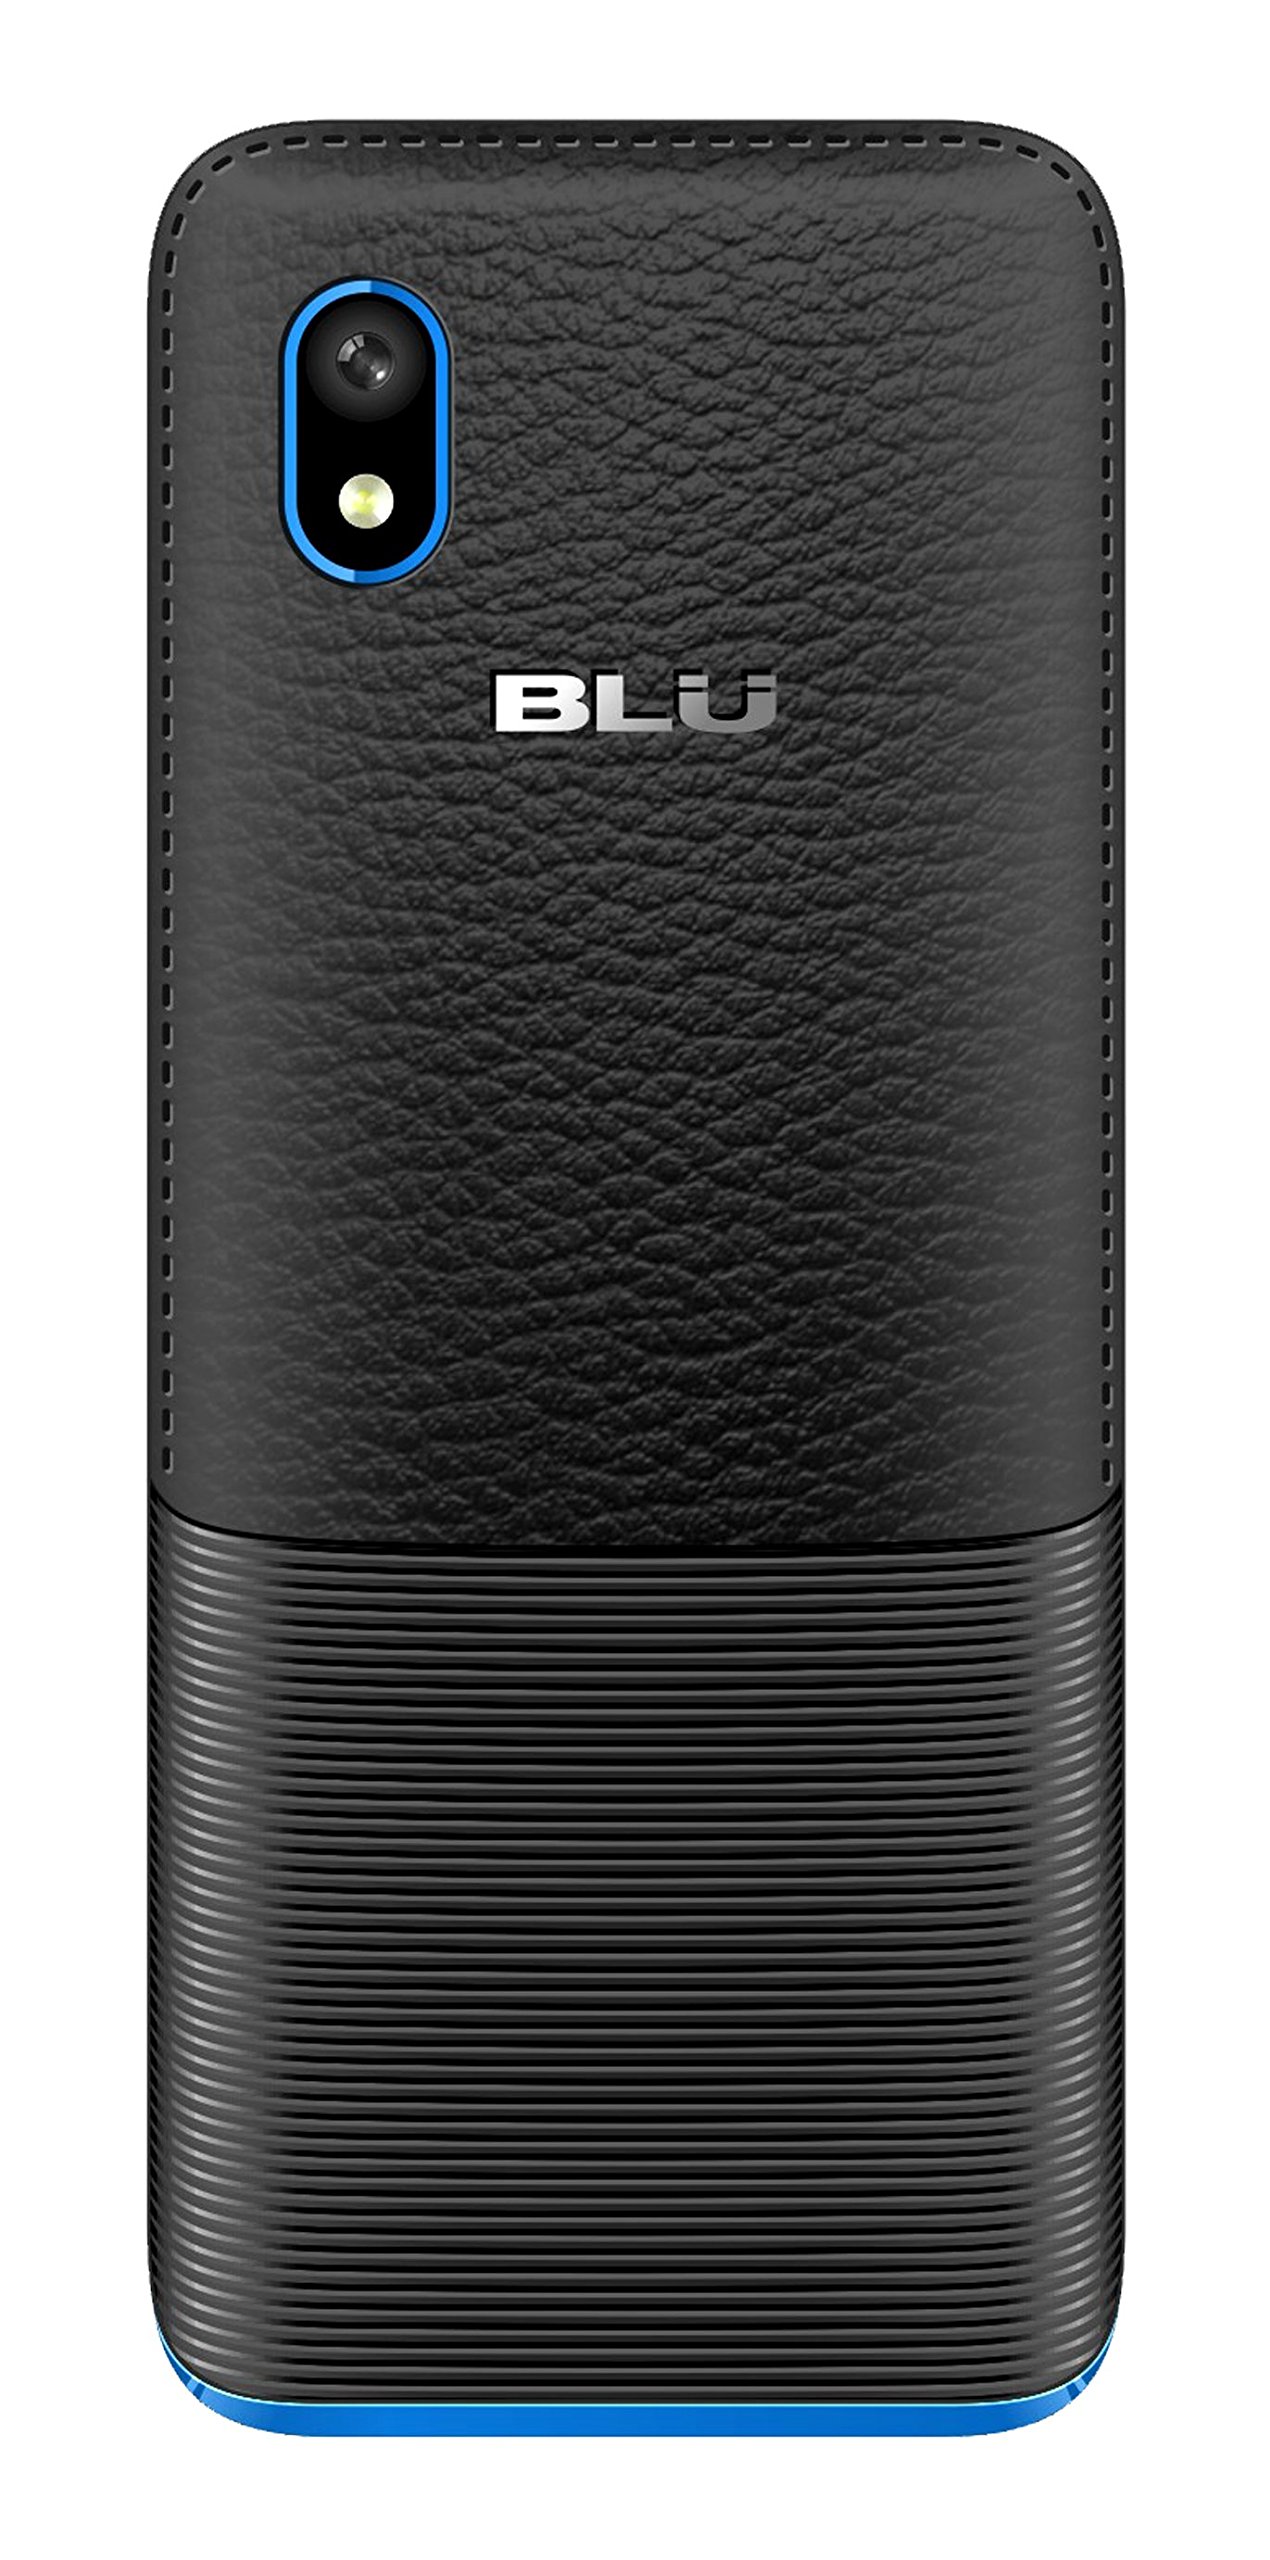 BLU Tank II T193 Unlocked GSM Dual-SIM Cell Phone w/ Camera and 1900 mAh Big Battery - Unlocked Cell Phones - Retail Packaging - Black Blue